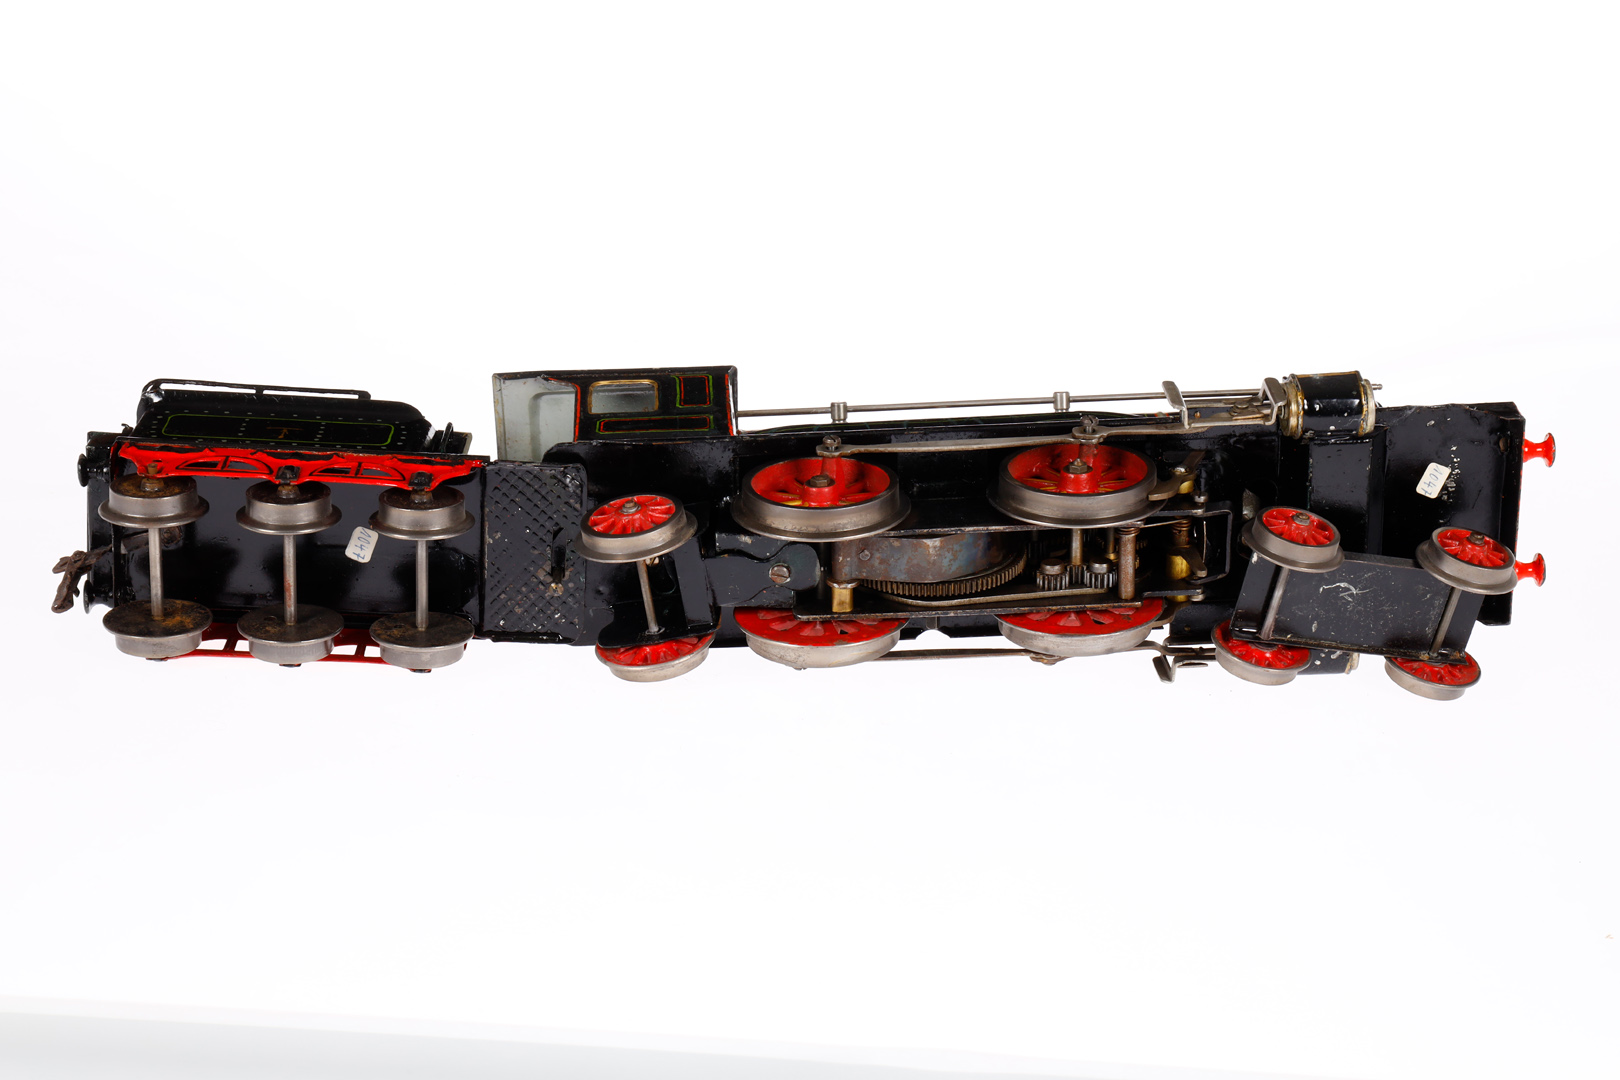 Märklin 2-B-1 Dampflok CE 1021, Spur 1, uralt, Uhrwerk intakt, schwarz, mit Tender, 3 imit. - Image 5 of 5